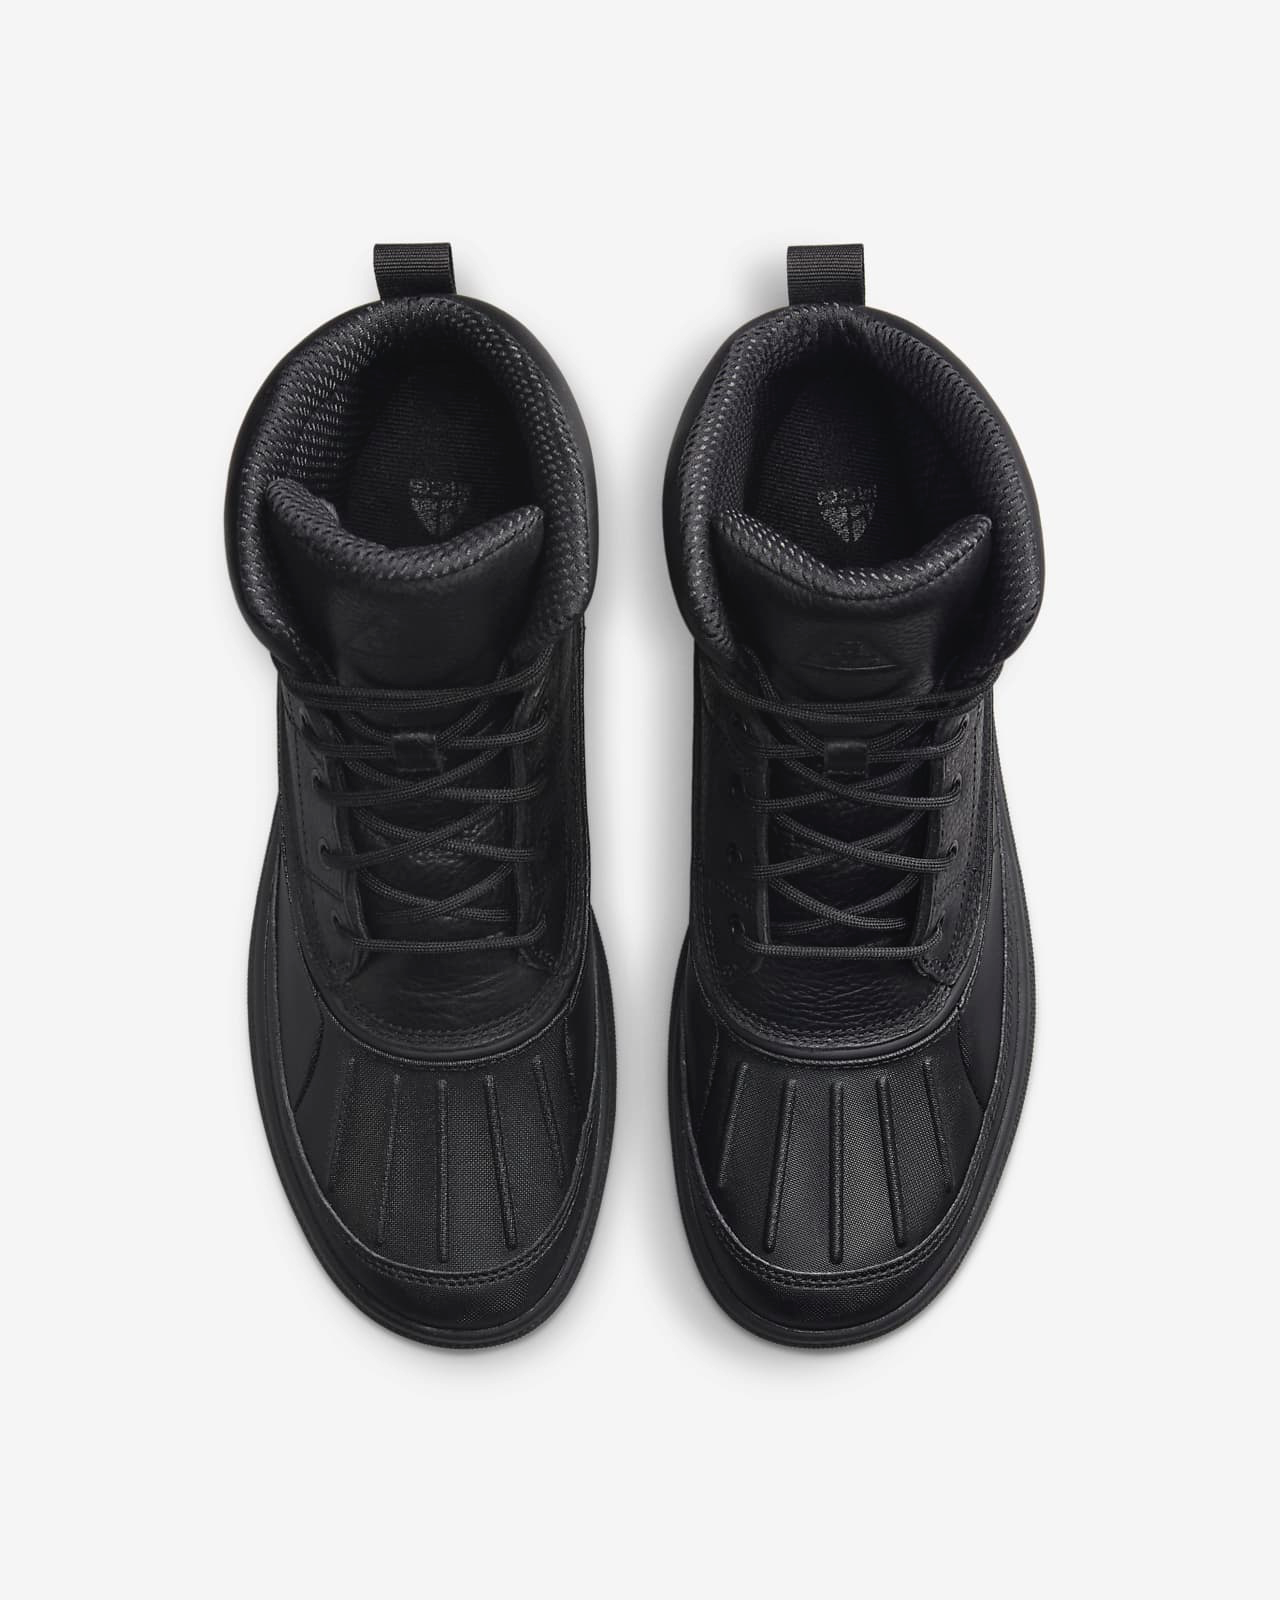 525393-090 Nike ACG Woodside II Men's Boot Black/Black